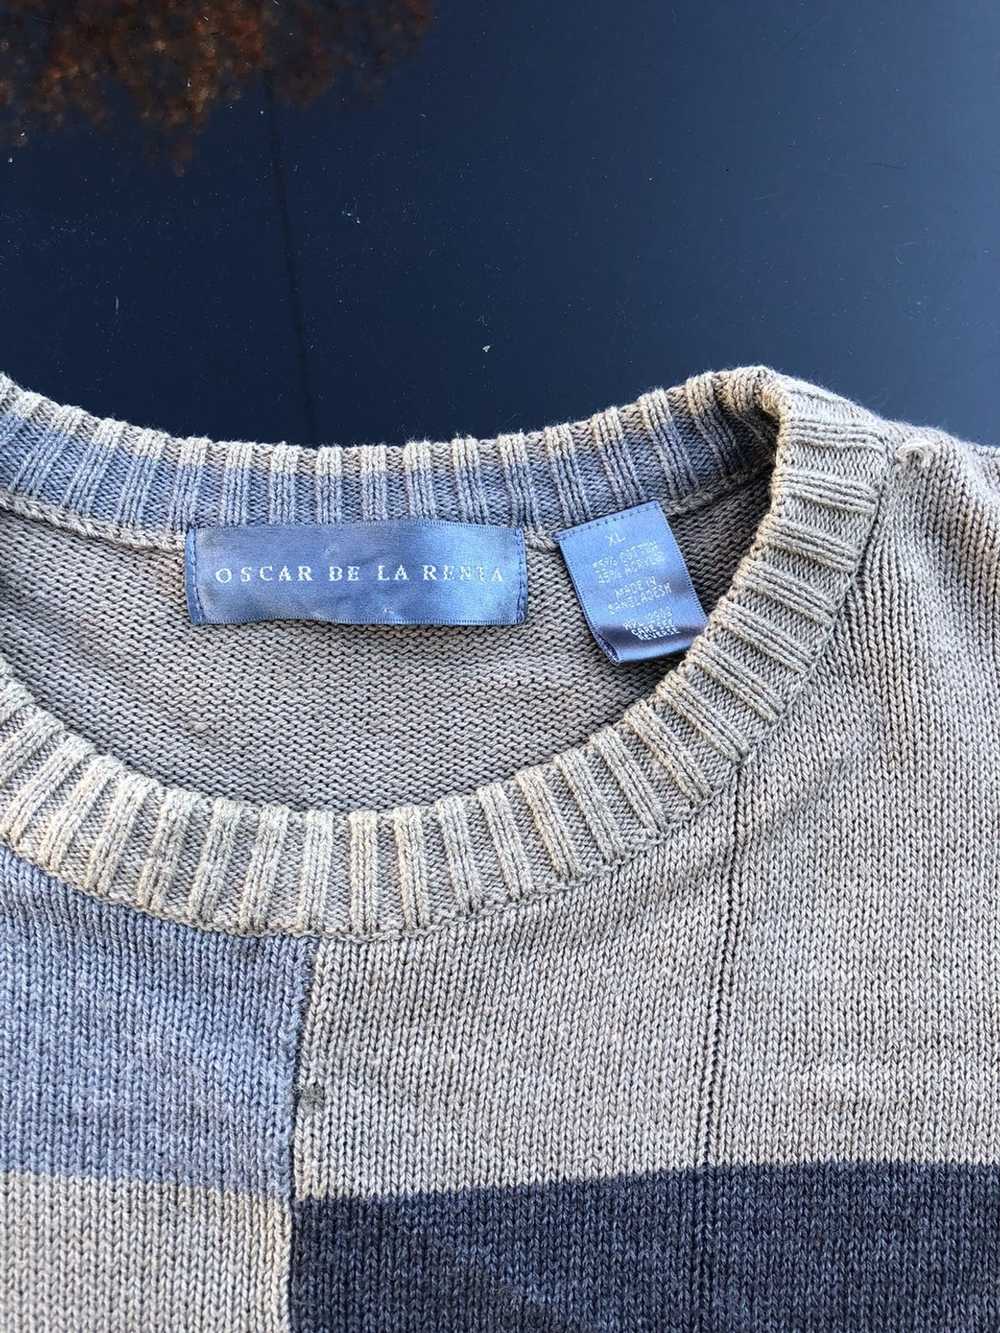 Vintage vintage beige brown and grey knit sweater - image 3